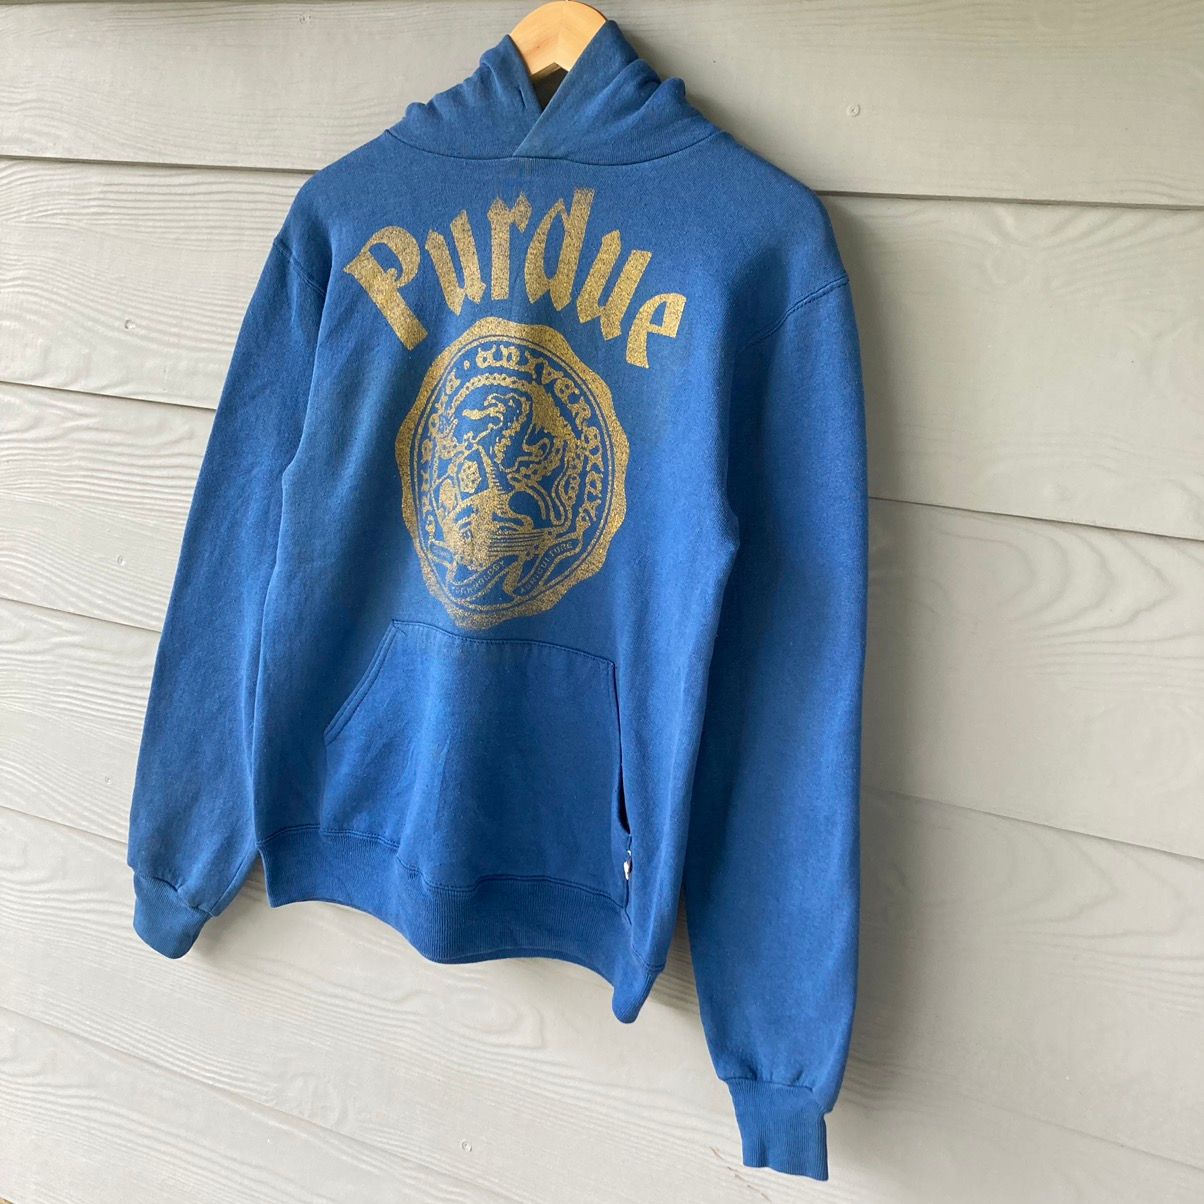 Vintage Purdue College Blue Sweatershirt SKU -SWST004 - 3